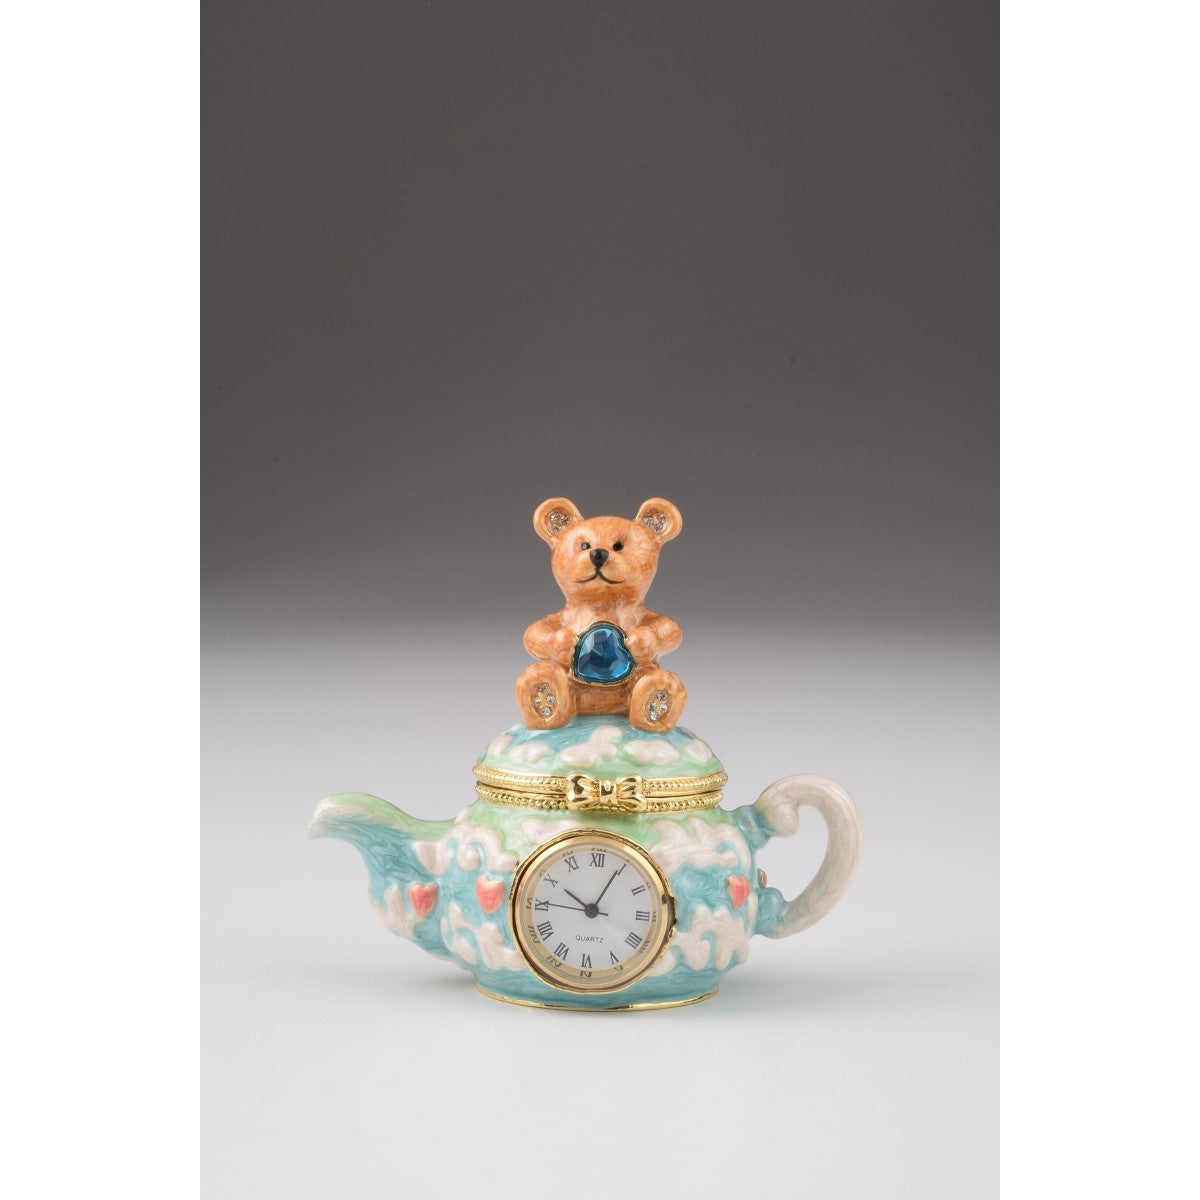 Bear with Clock Faberge Styled Trinket Box by Keren Kopal